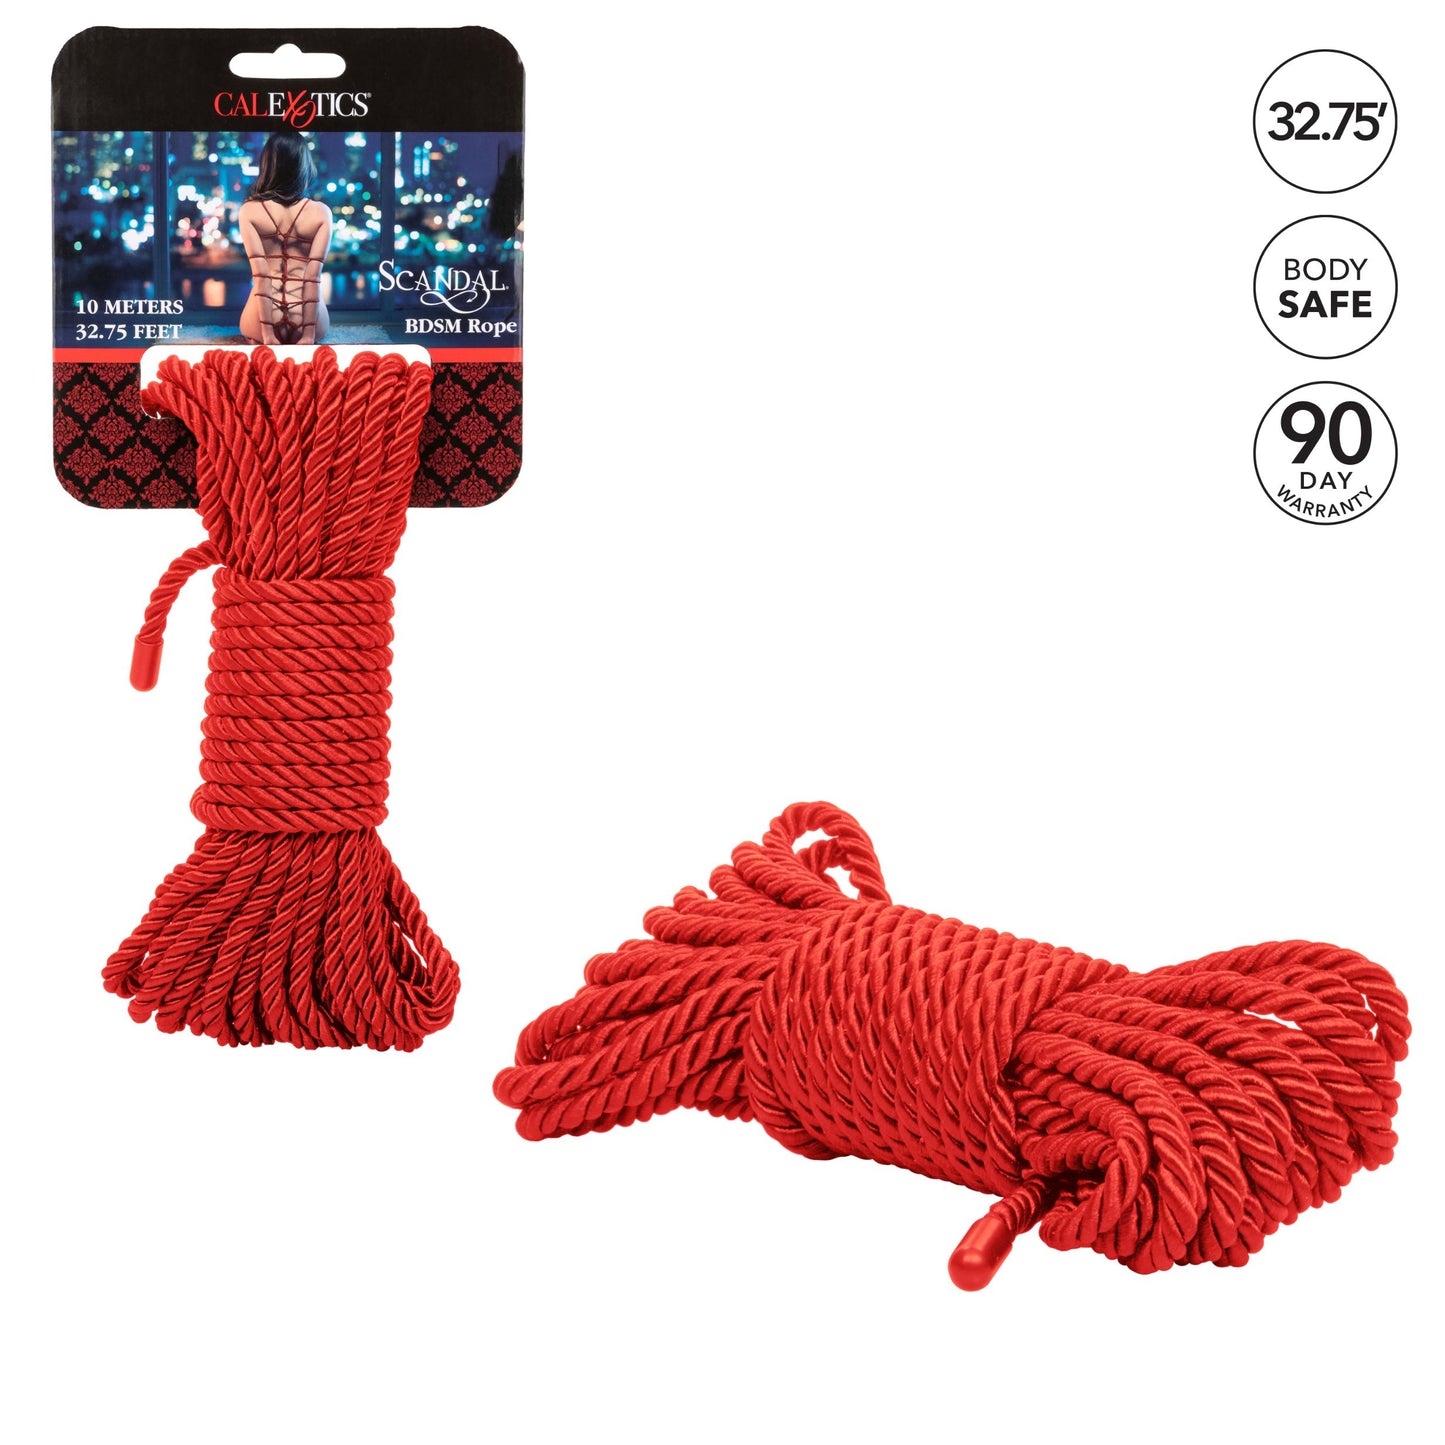 Scandal BDSM Rope 32.75ft- 10m - Red